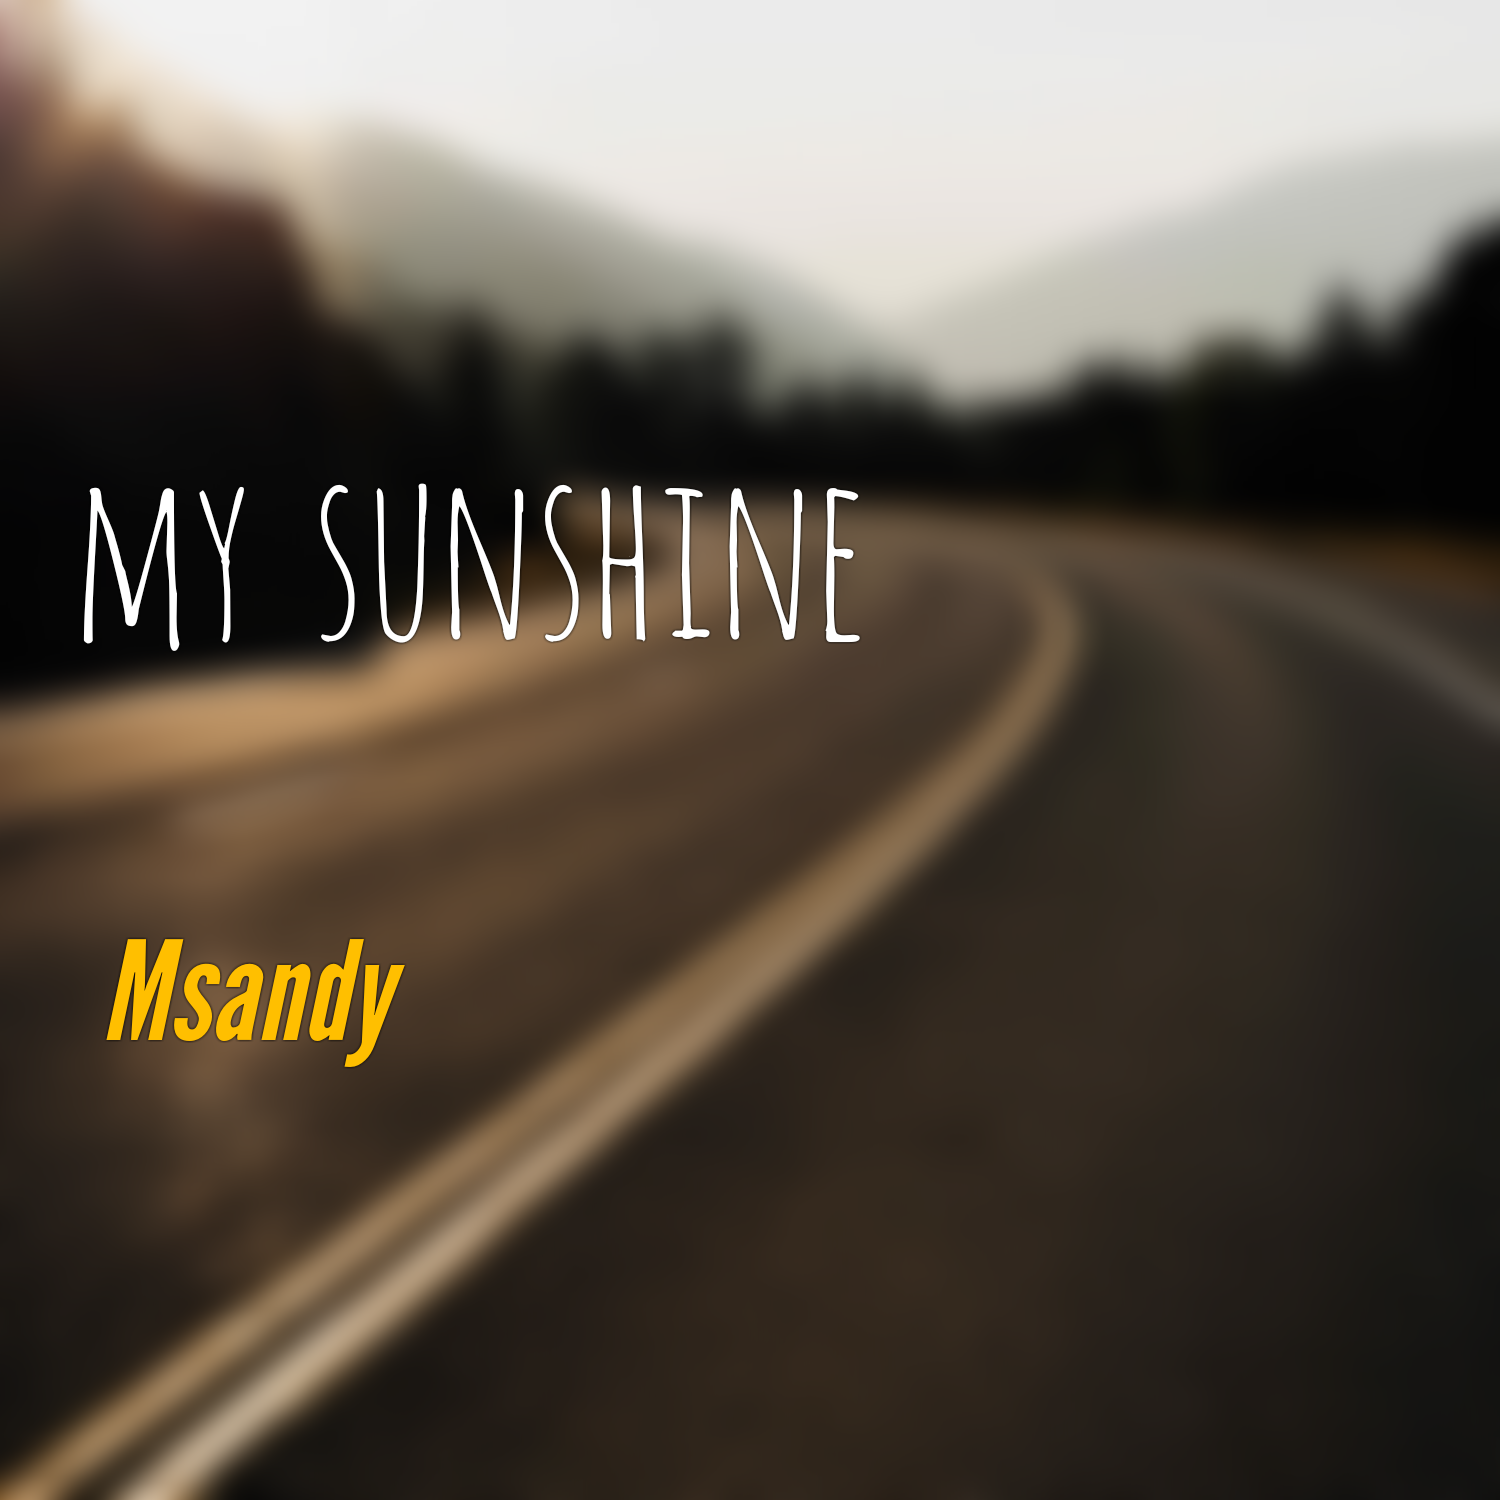 My sunshine - Msandy